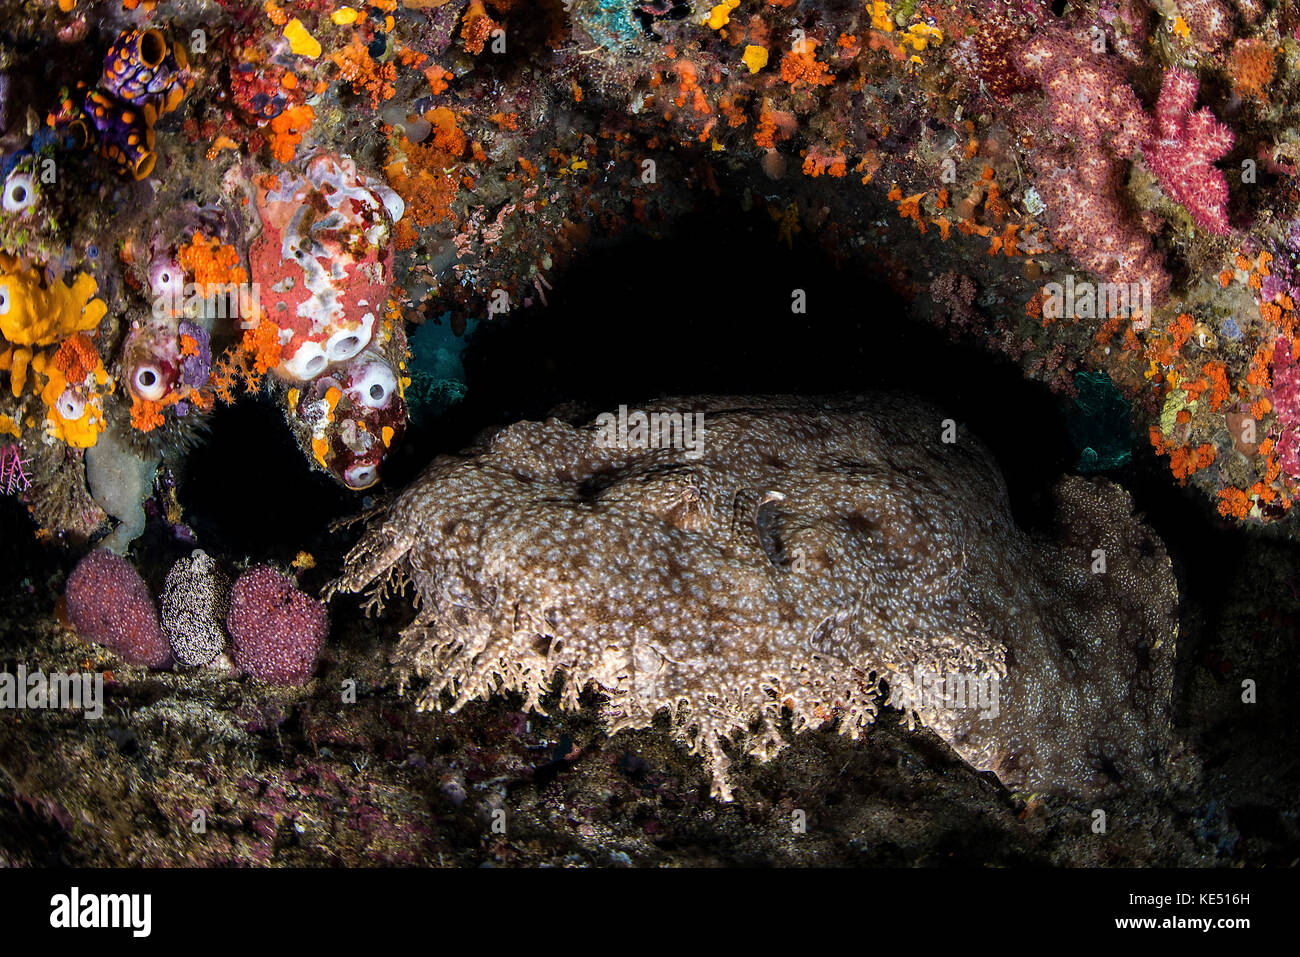 A wobbegong shark sleeps under a coral cavern. Stock Photo